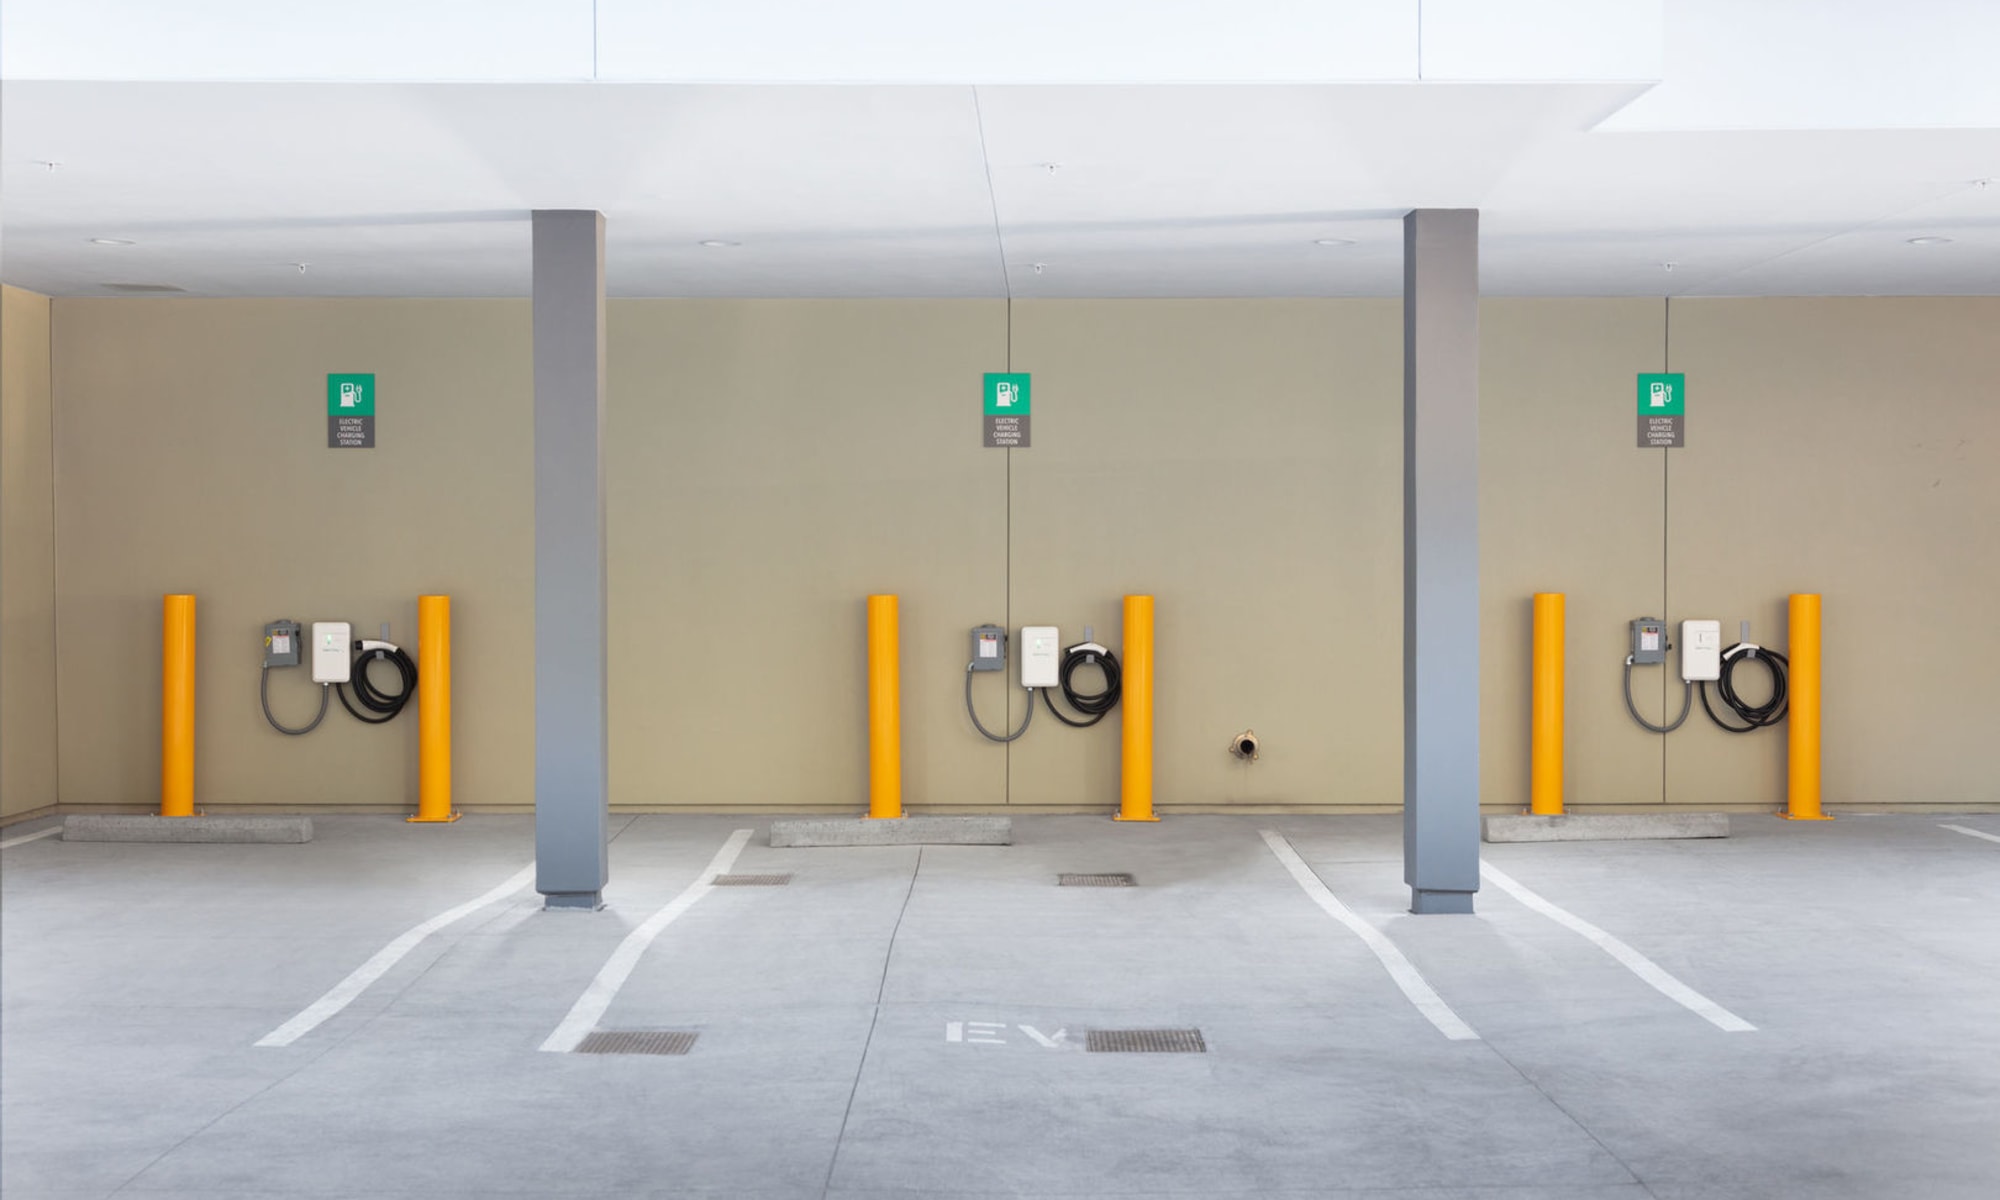 Electric car charging at The Palomino in Palo Alto, California